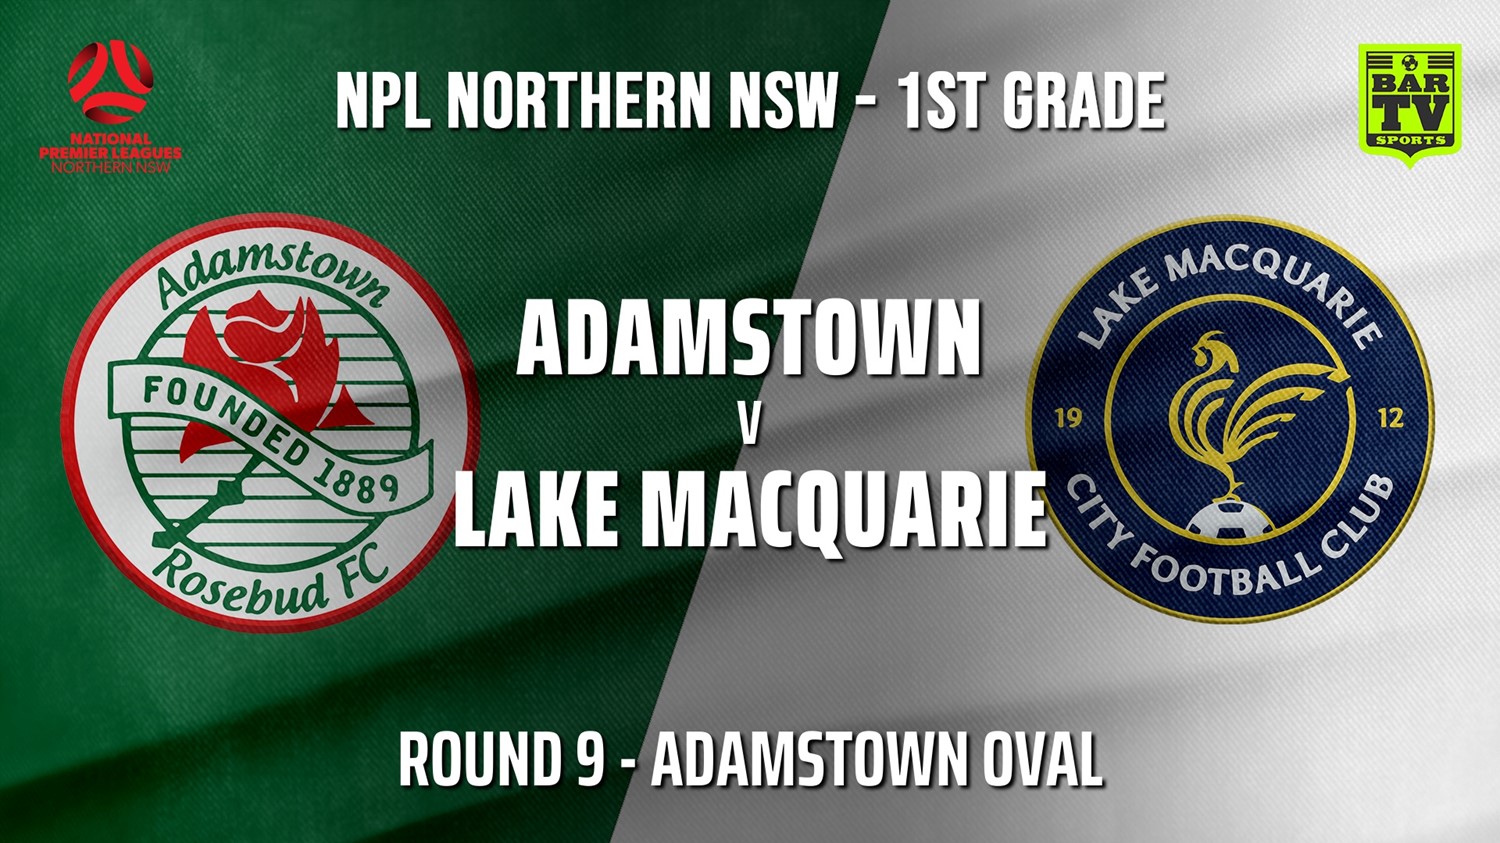 210529-NPL - NNSW Round 9 - Adamstown Rosebud FC v Lake Macquarie City FC Minigame Slate Image